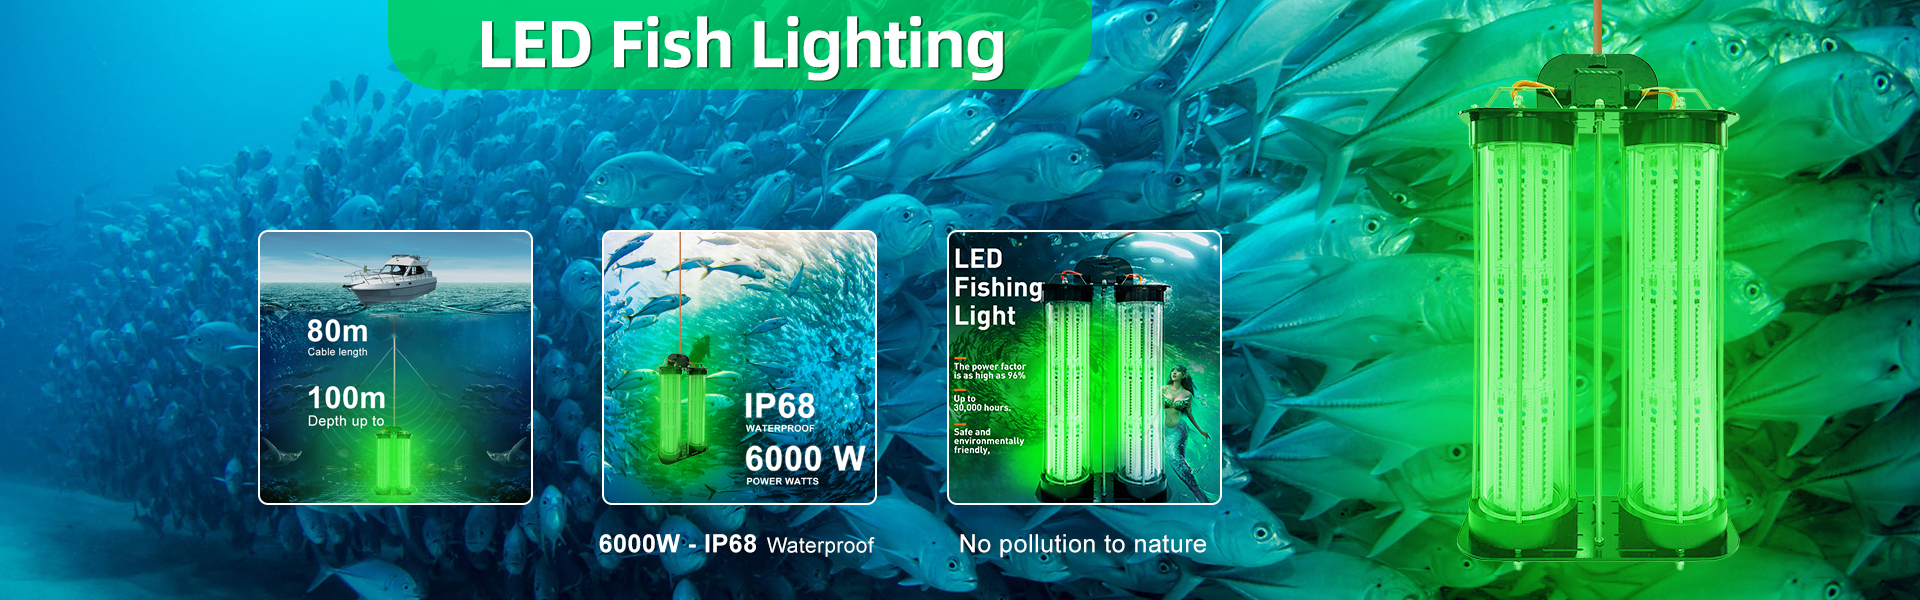 main products are LED Fishing Light，LED Corn Light，LED grow lights